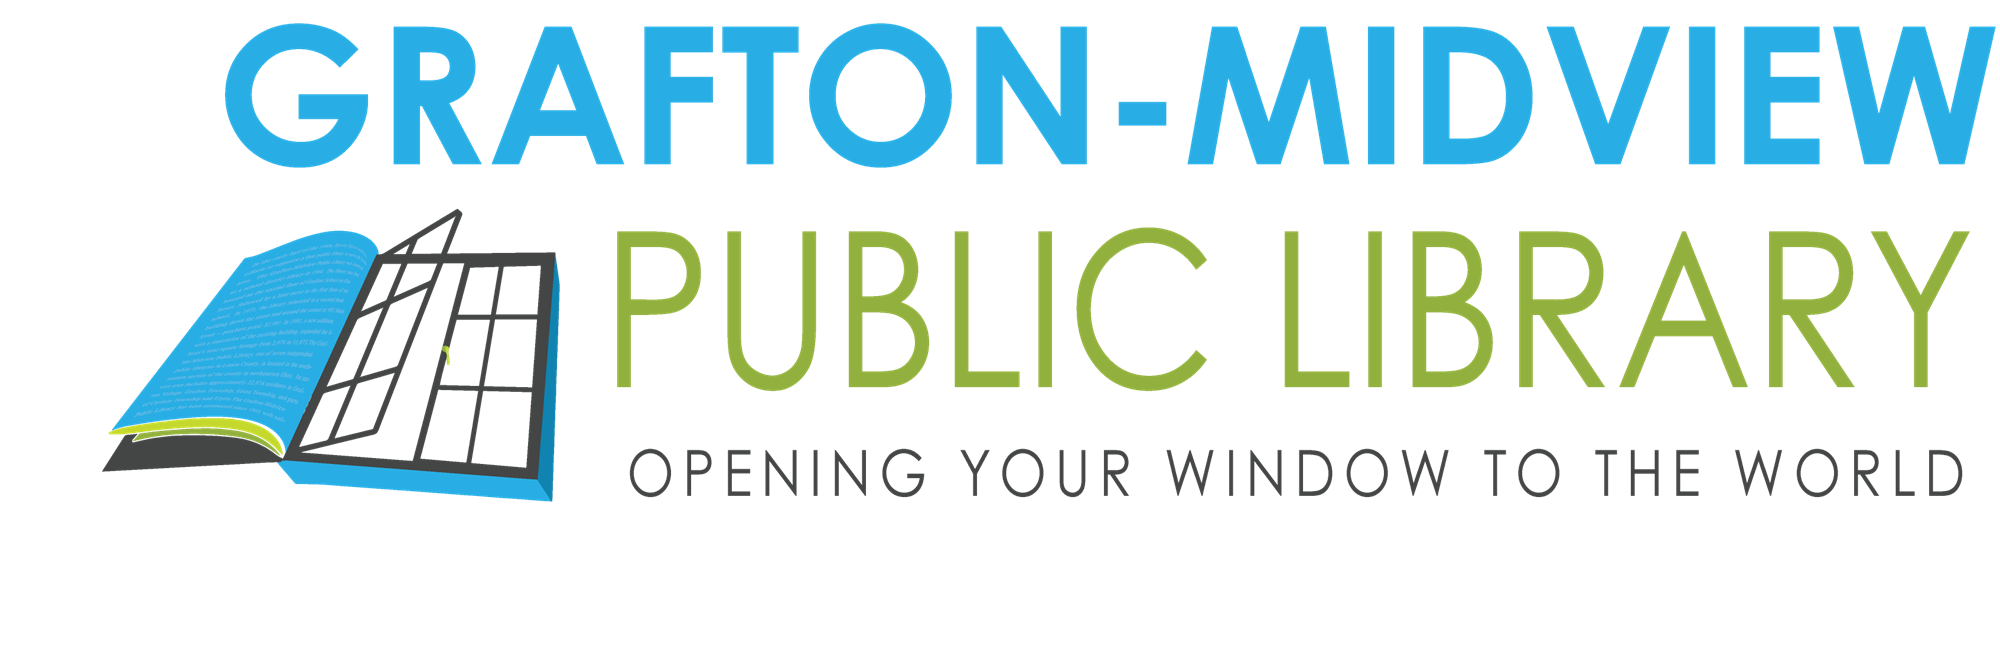 Grafton-Midview Public Library